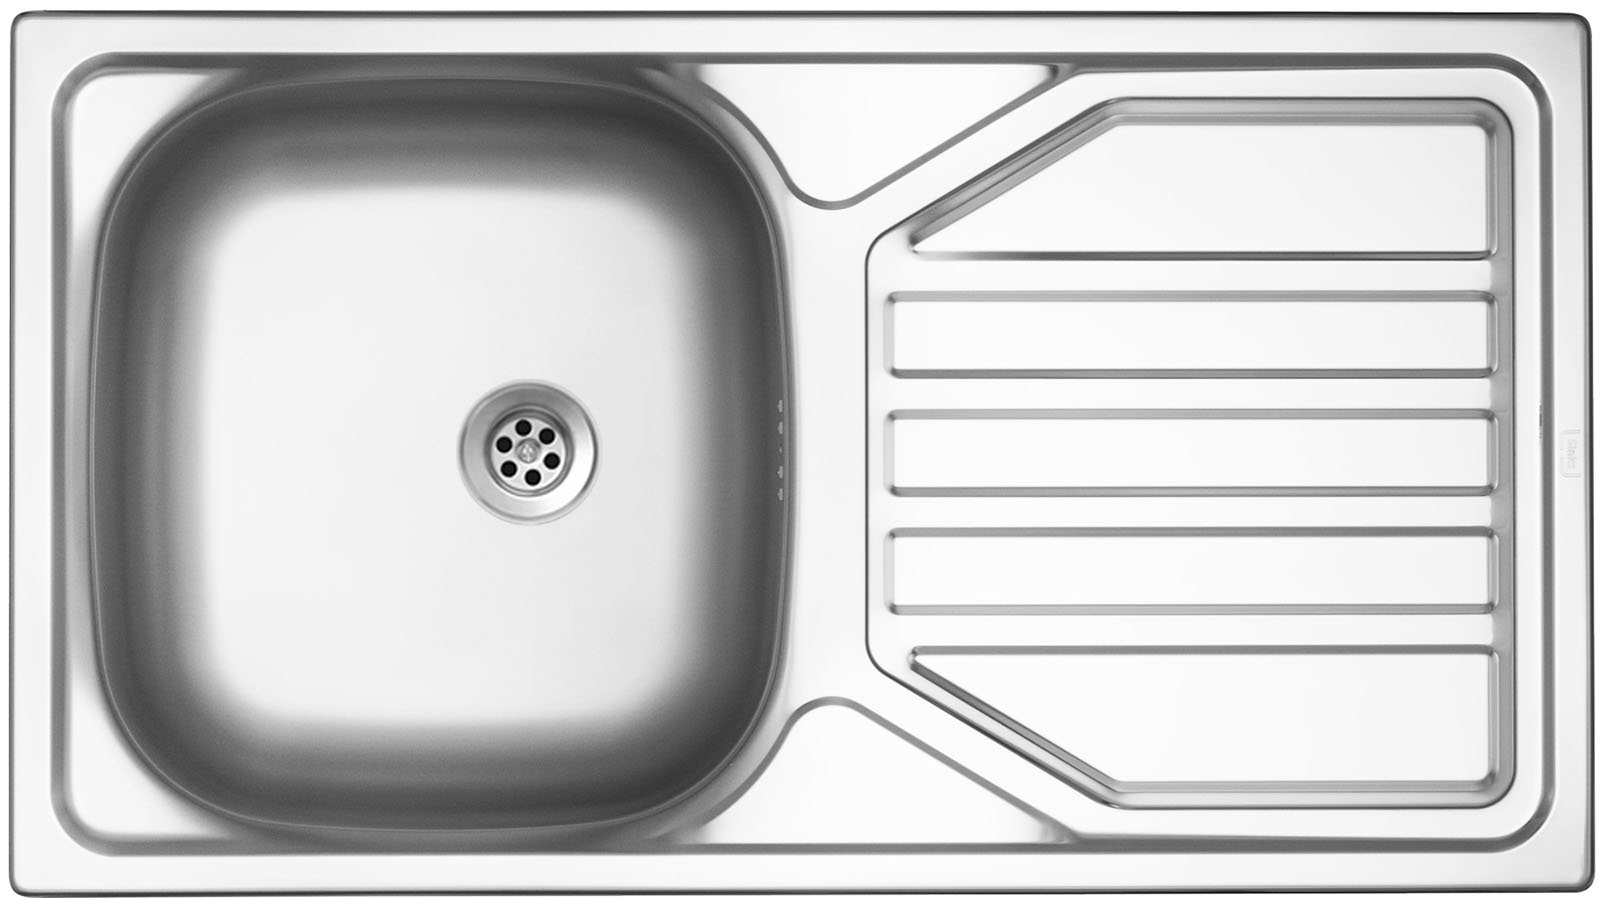 Sinks OKIO 780 M 0,5mm matný